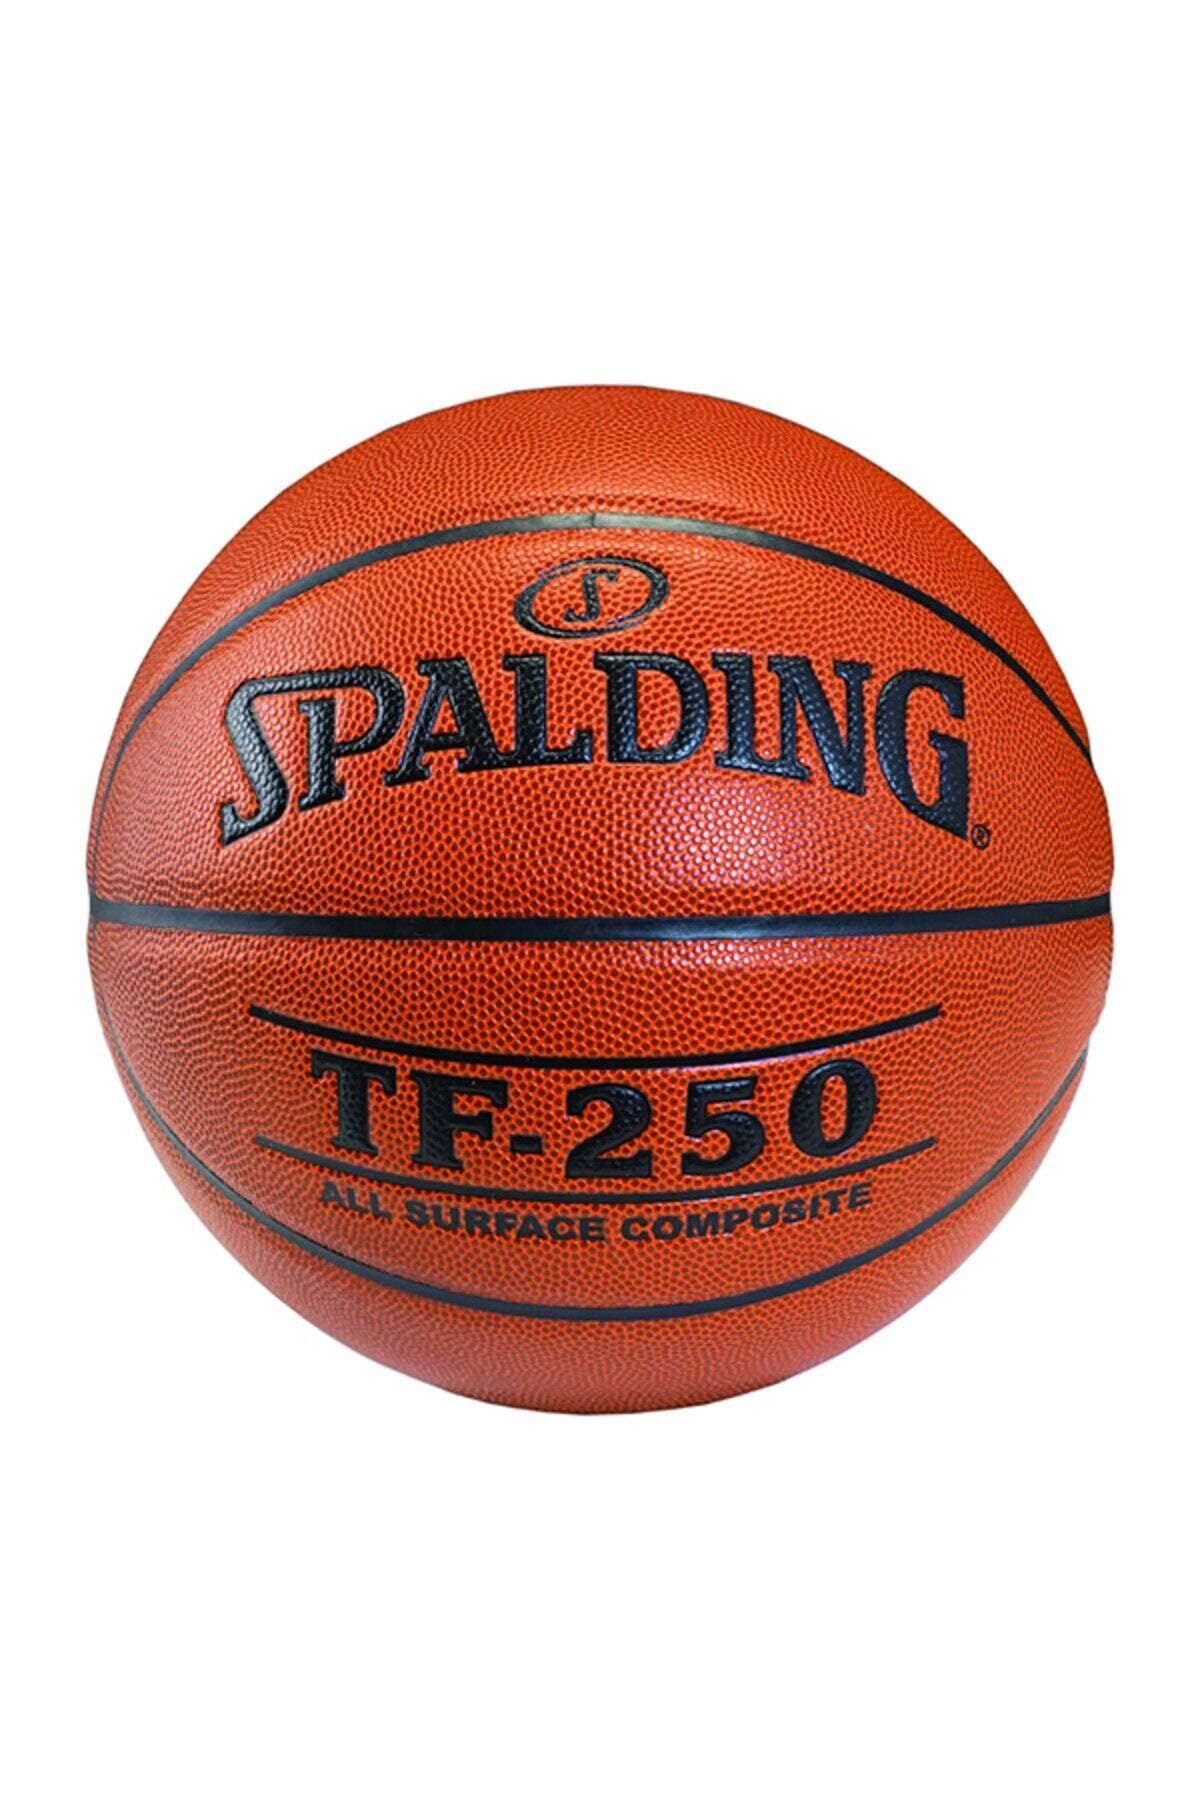 Spalding Tf-250 Basket Topu All Surface No:6 - 4749